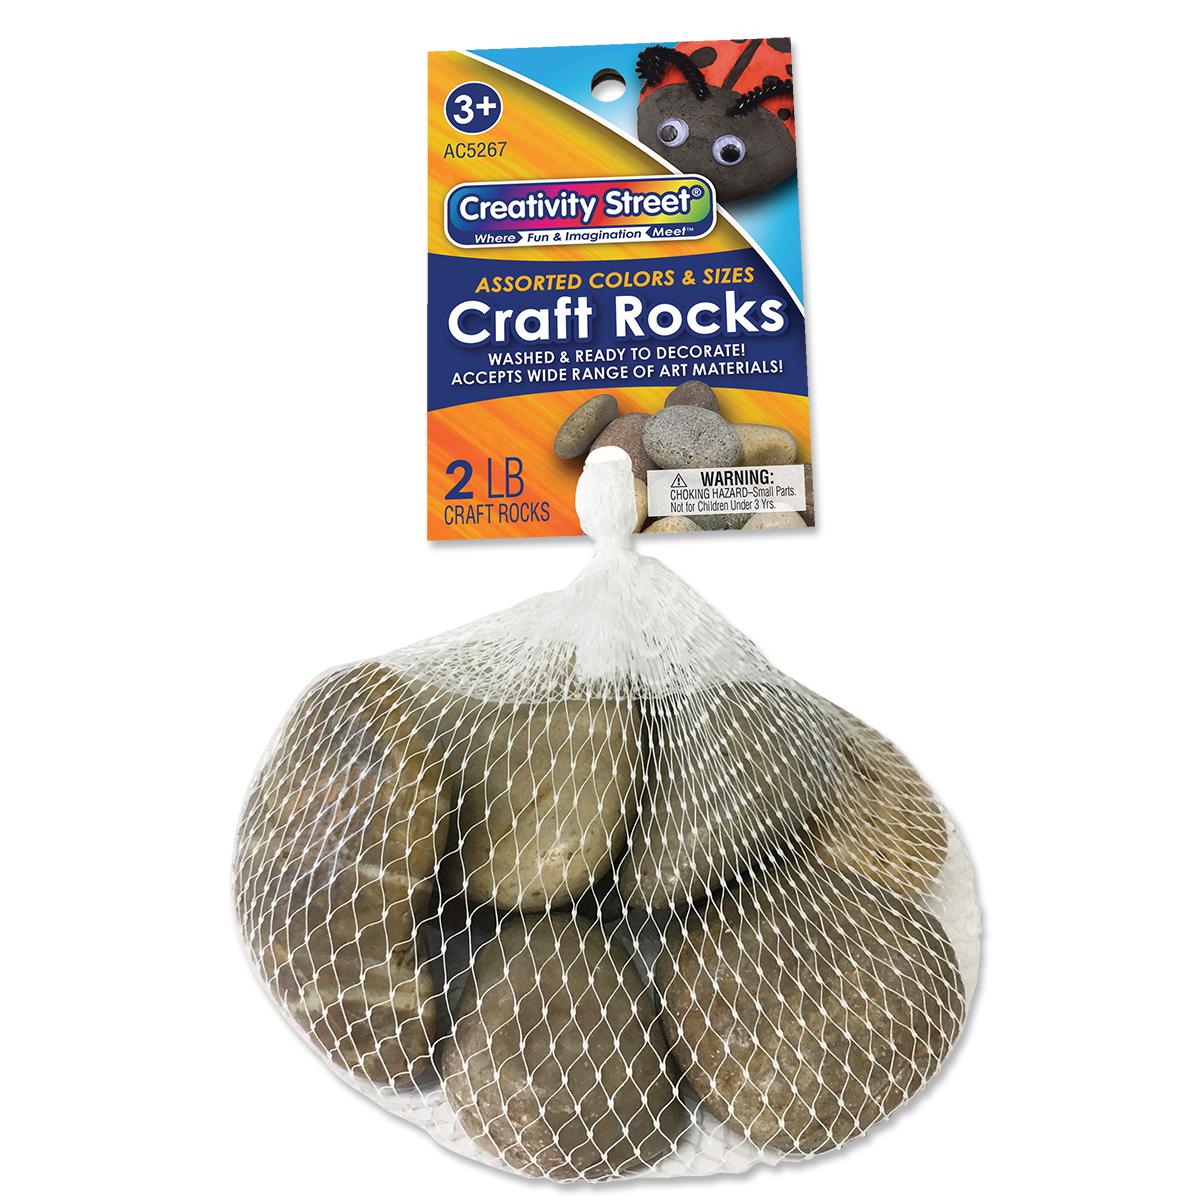  Craft Rocks 